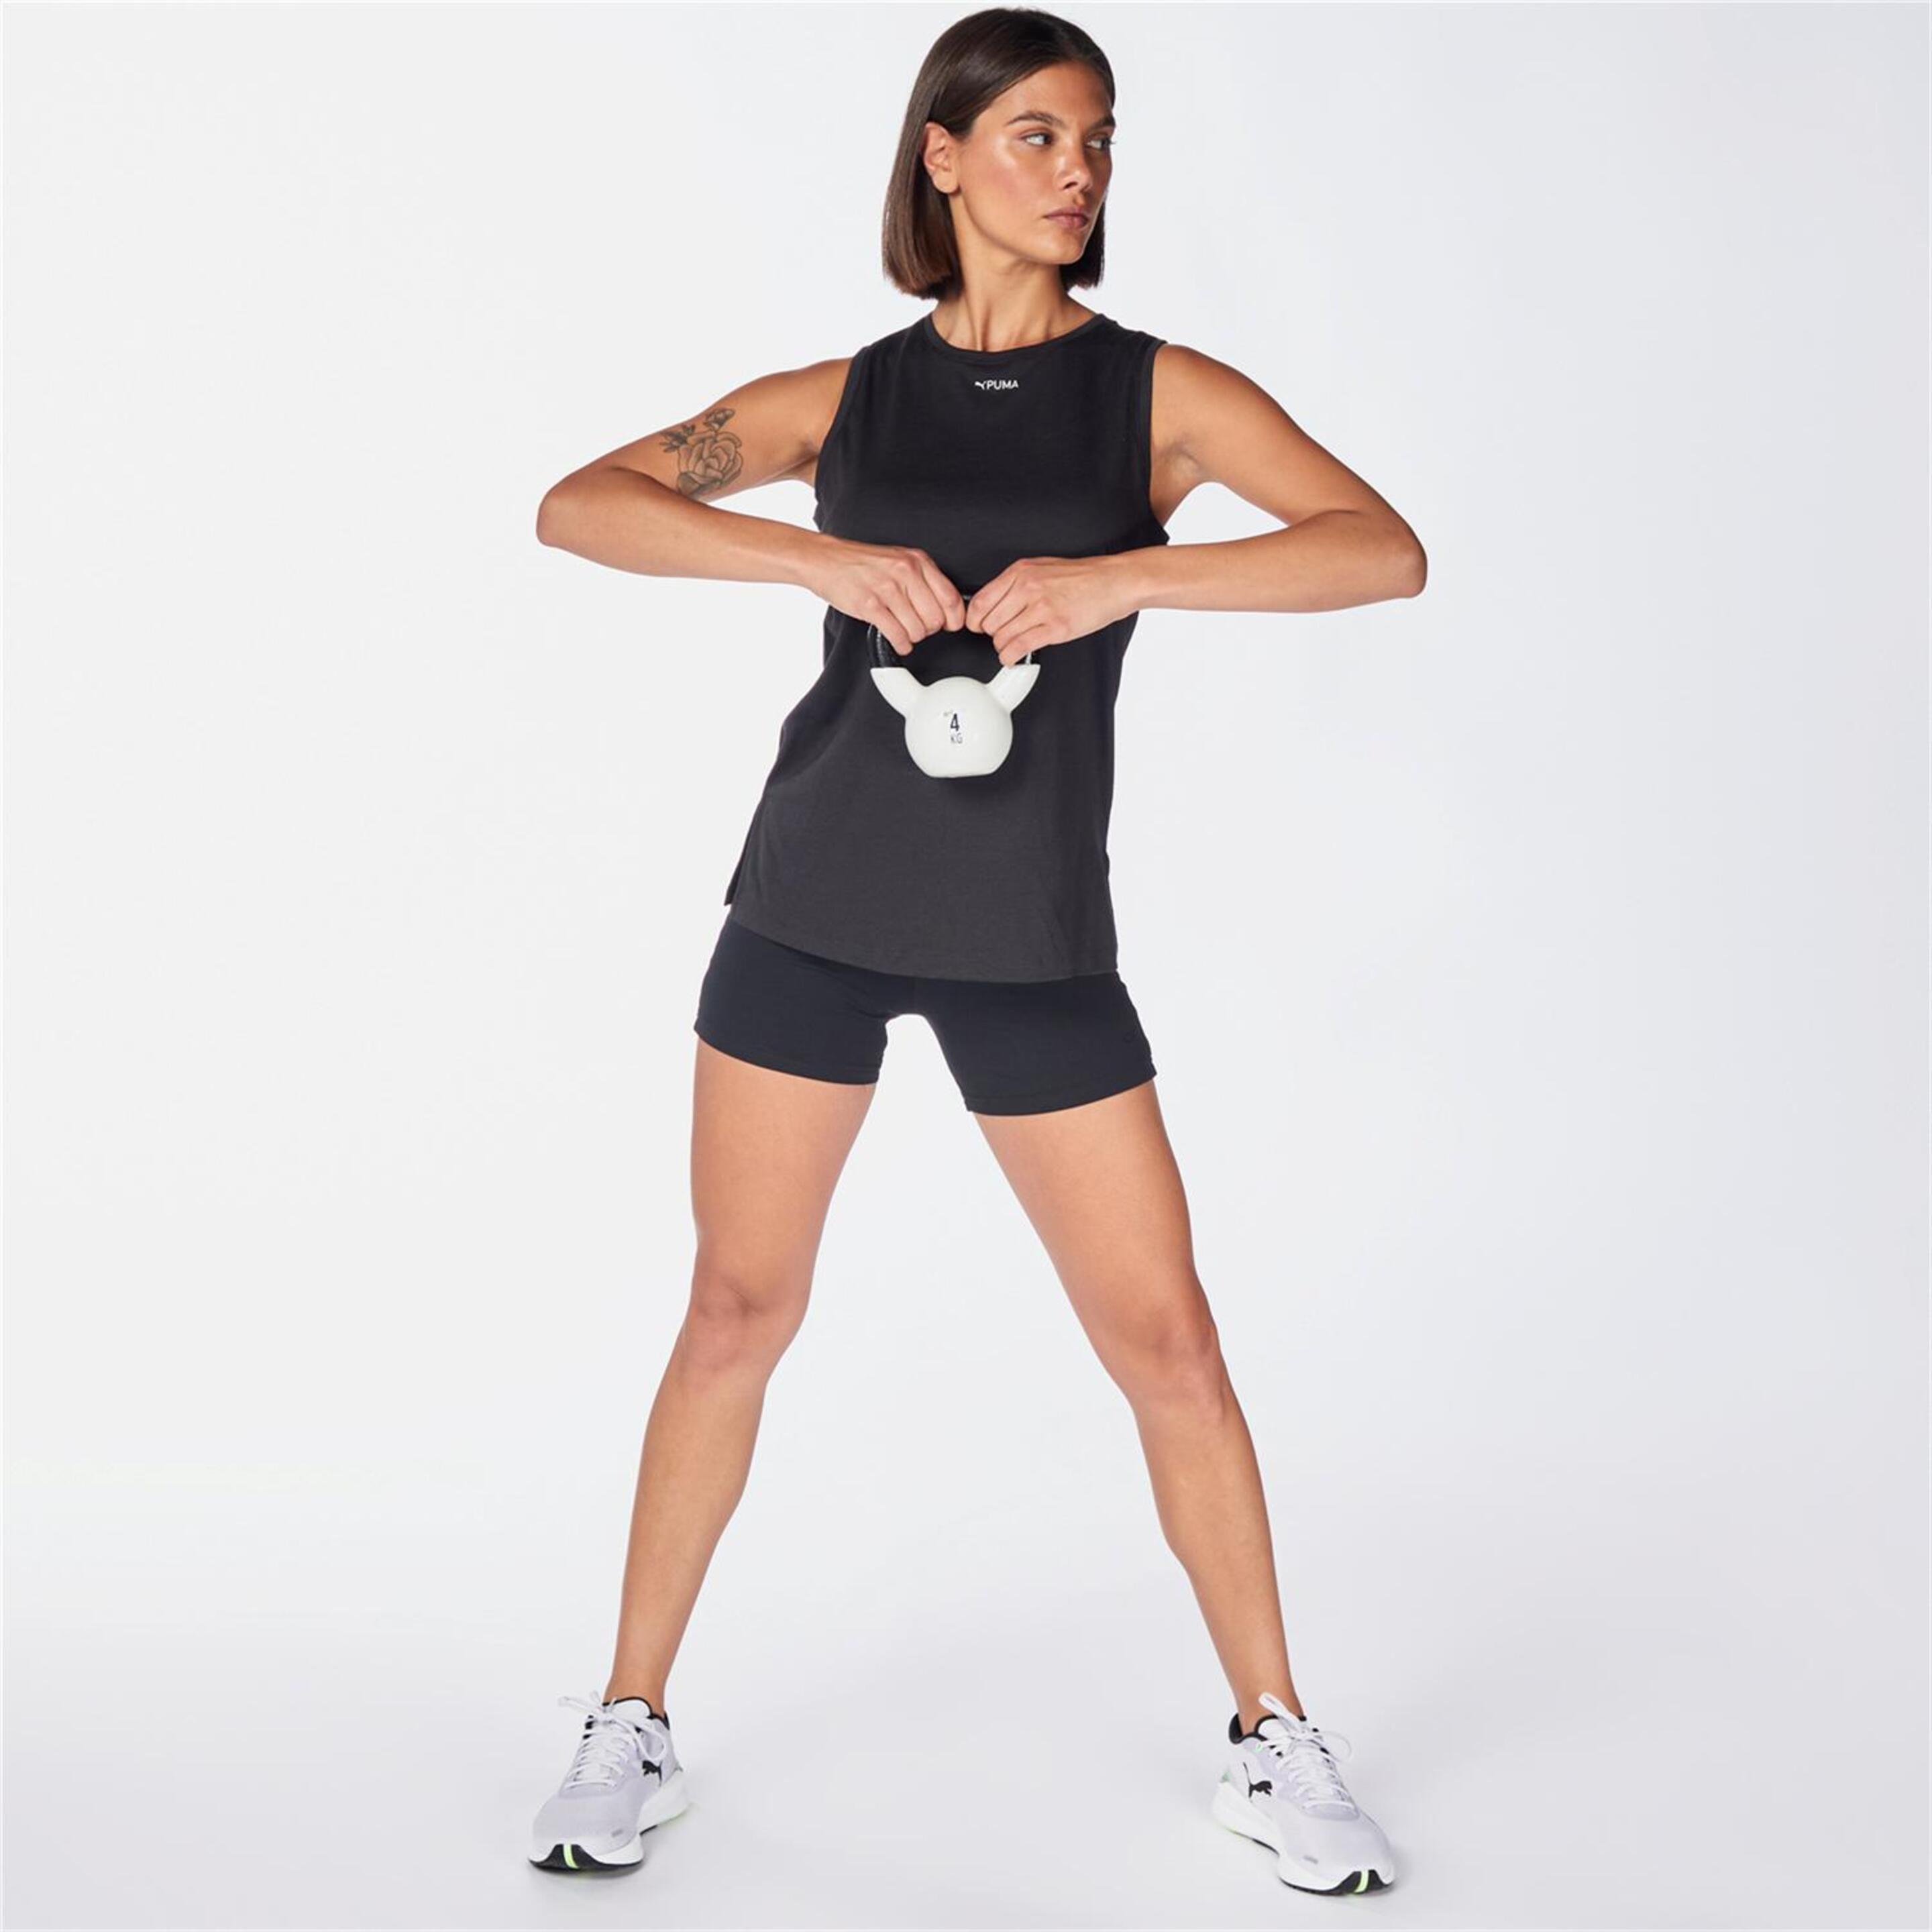 Camiseta Puma - Negro - Camiseta Fitness Mujer